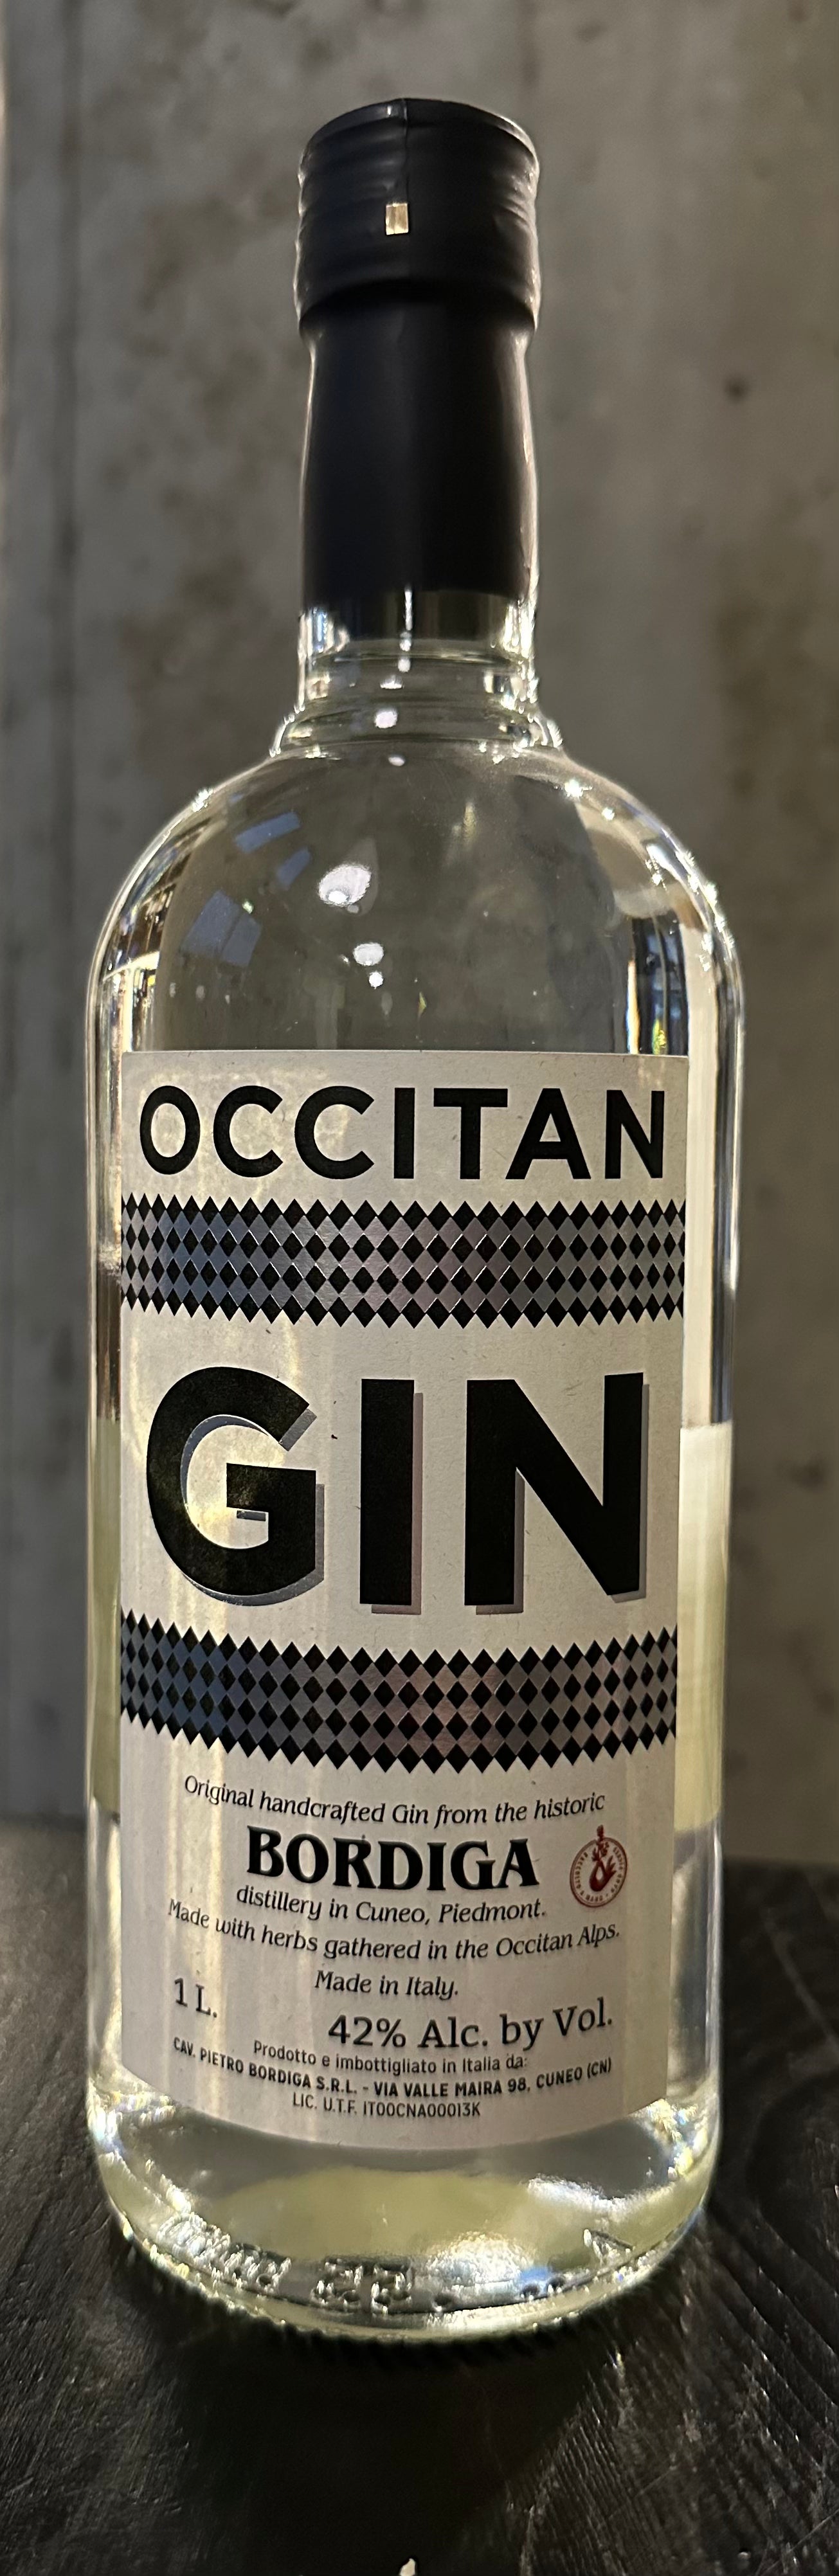 Bordiga "Occitan" Gin (1 Liter)